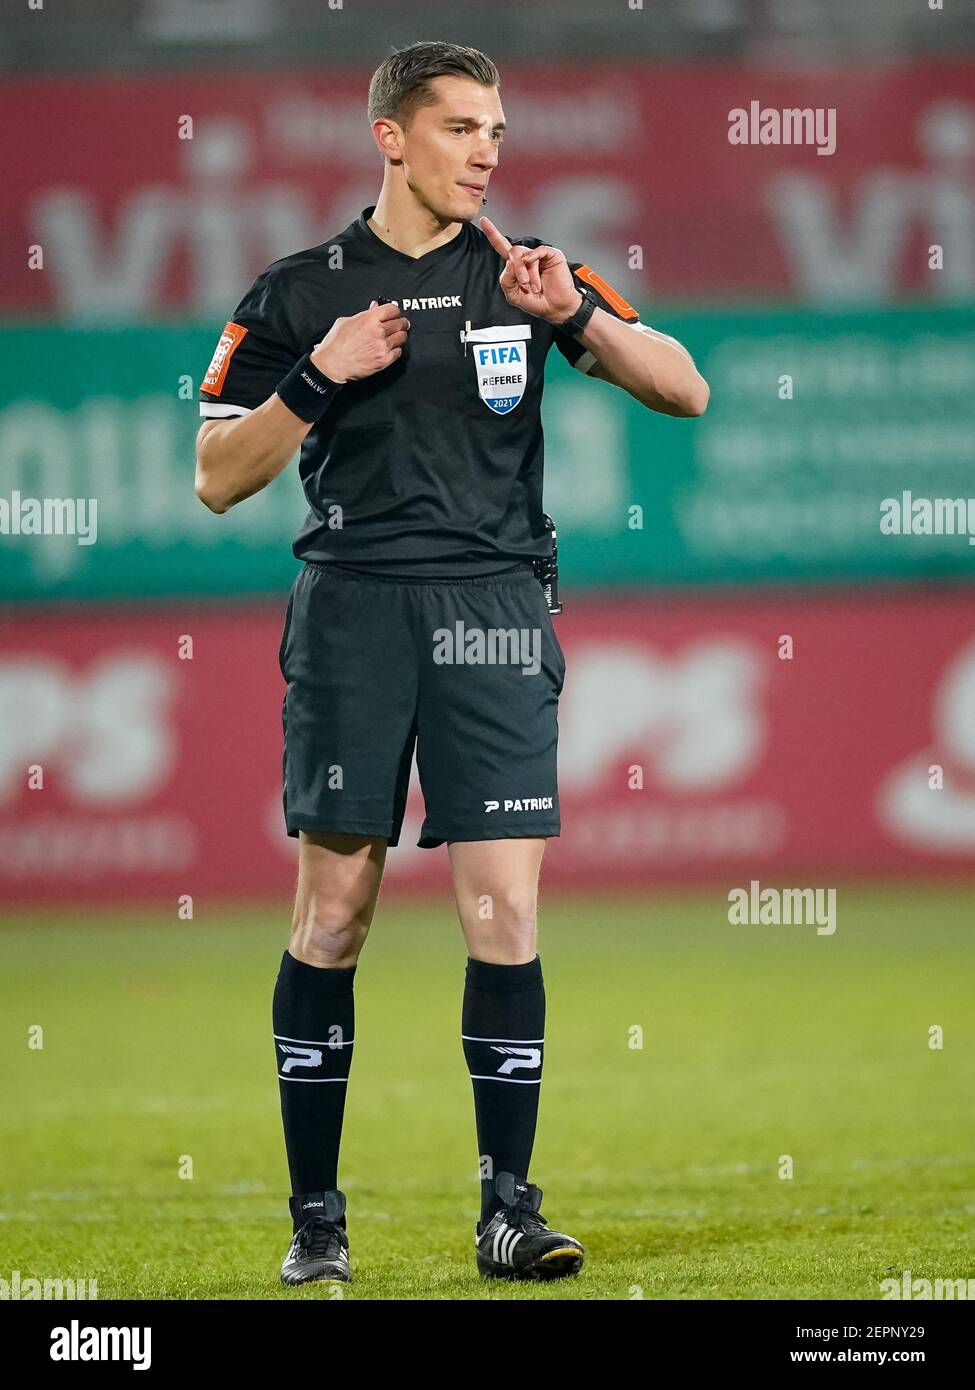 KORTRIJK, BELGIO - FEBBRAIO 27: Arbitro Jonathan Lardot durante la partita della Jupiler Pro League tra KV Kortrijk e Zulte Waregem a Guldensporenstad Foto Stock